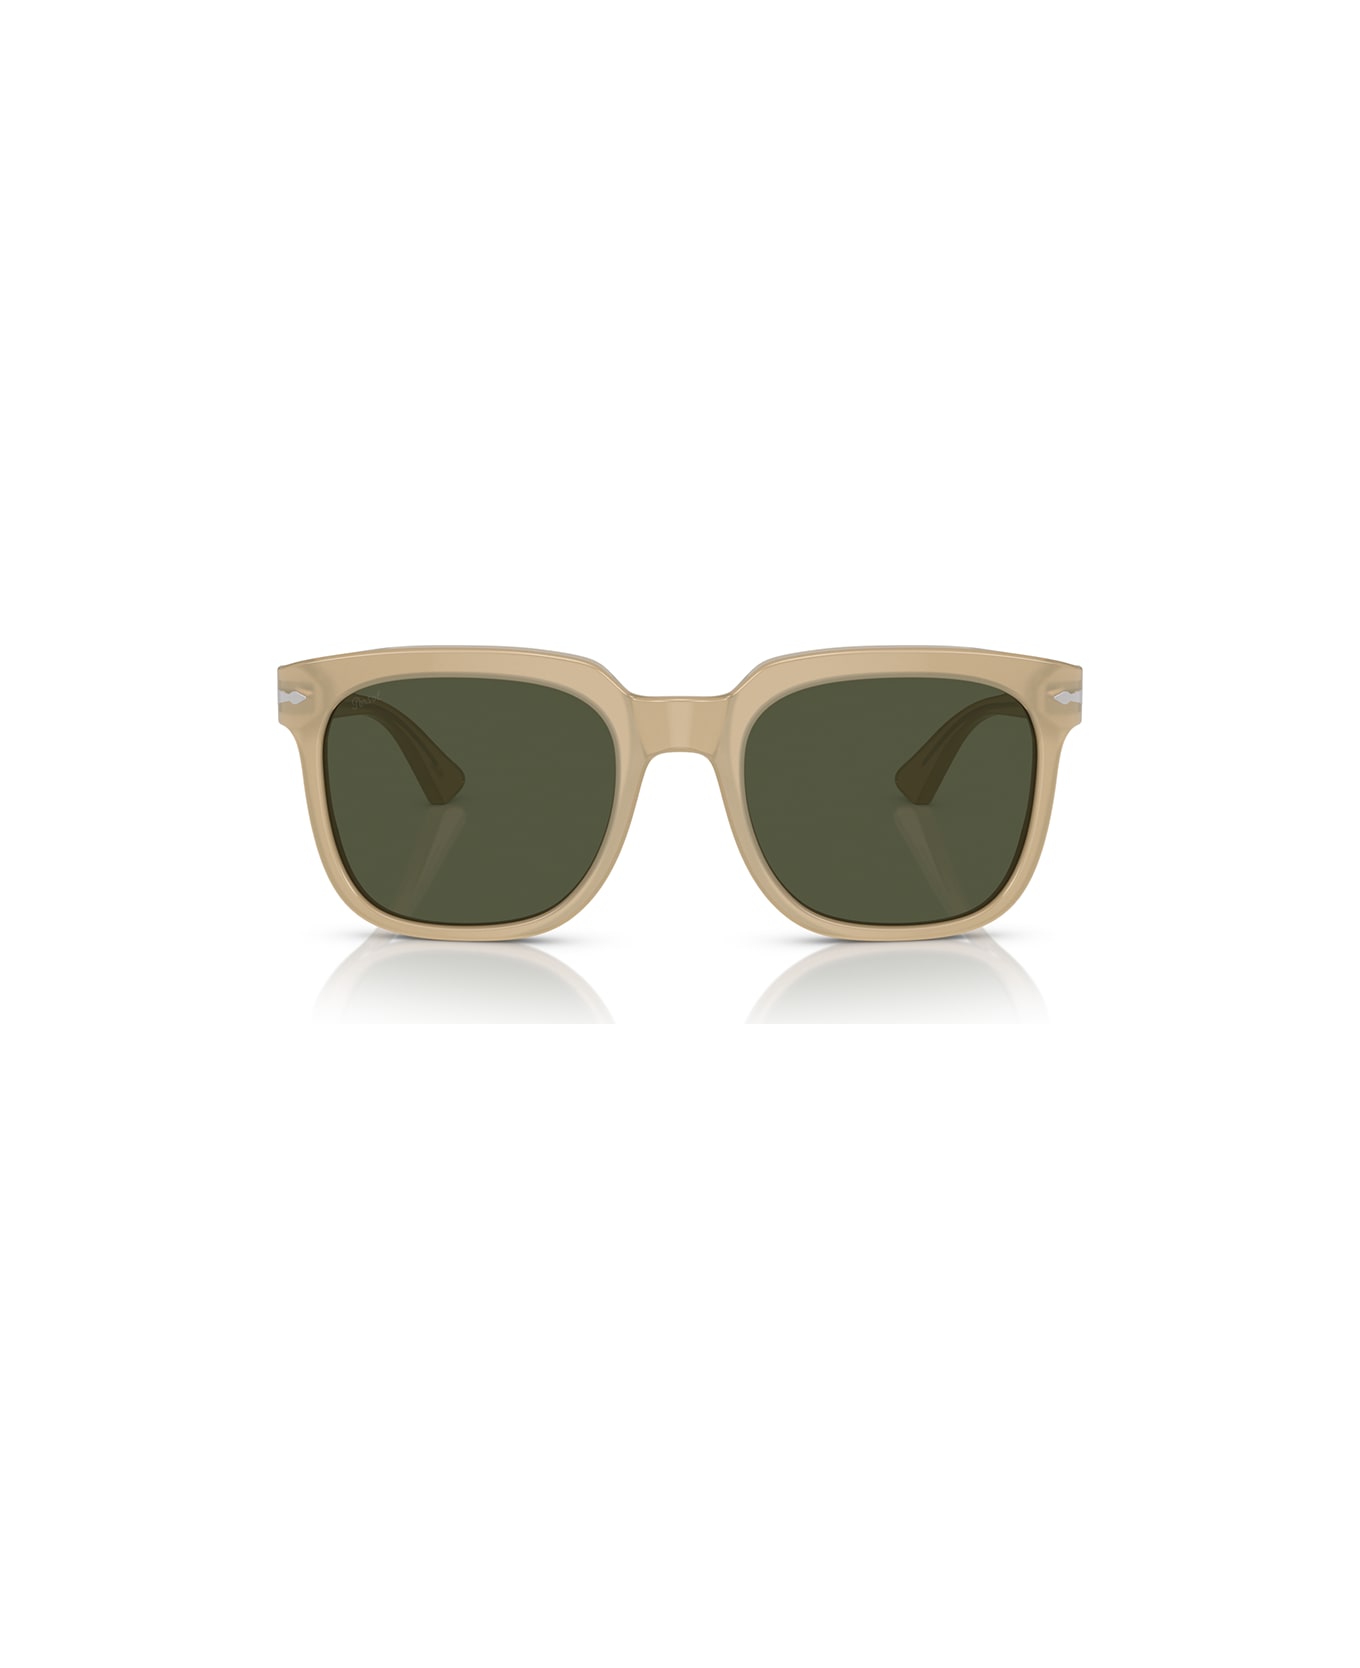 Persol Eyewear - Beige/Verde